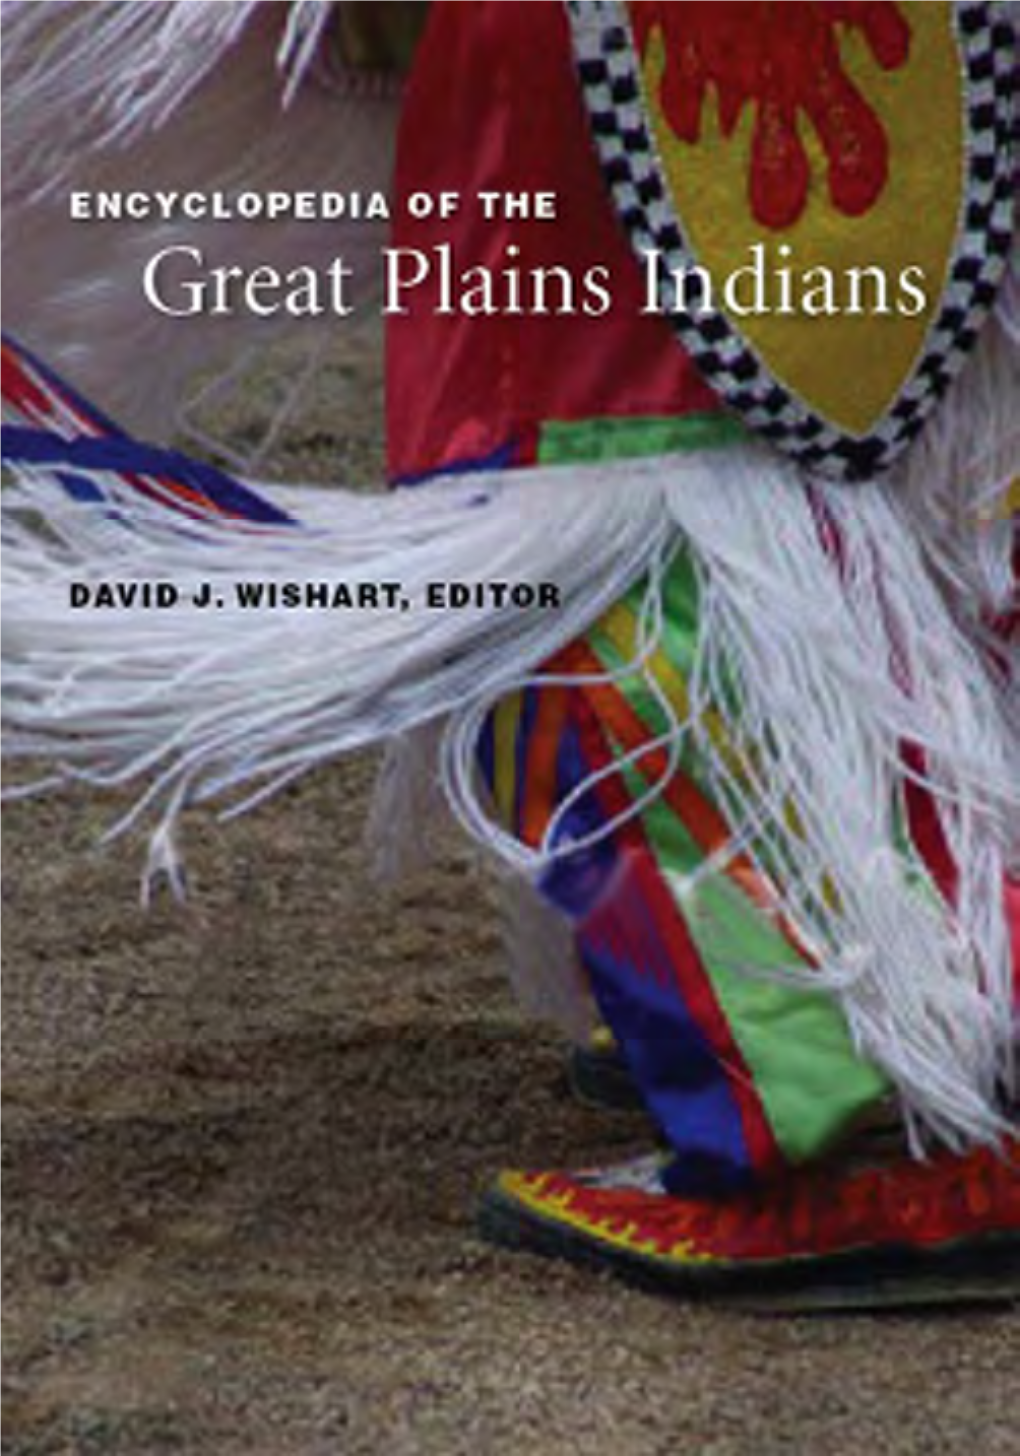 Encyclopedia of the Great Plains Indians DAVID J